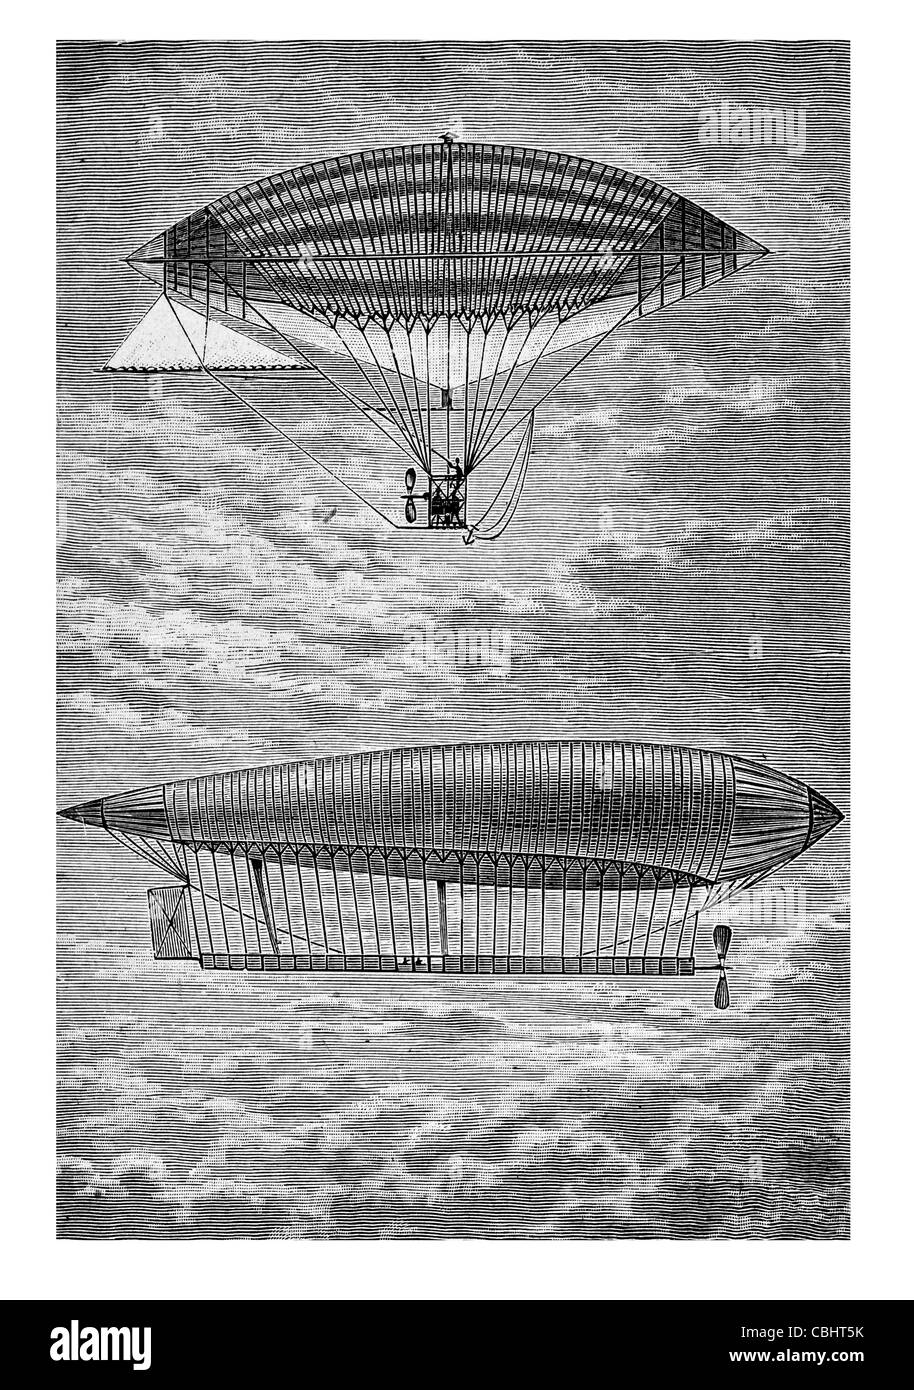 Aerostat Zeppeline Luftschiff Ballon Flugzeug reisen Wind macht Transport Fahrzeug Luftschiff Heißluft Wicker Korb Kapsel Kabel Gondel Stockfoto